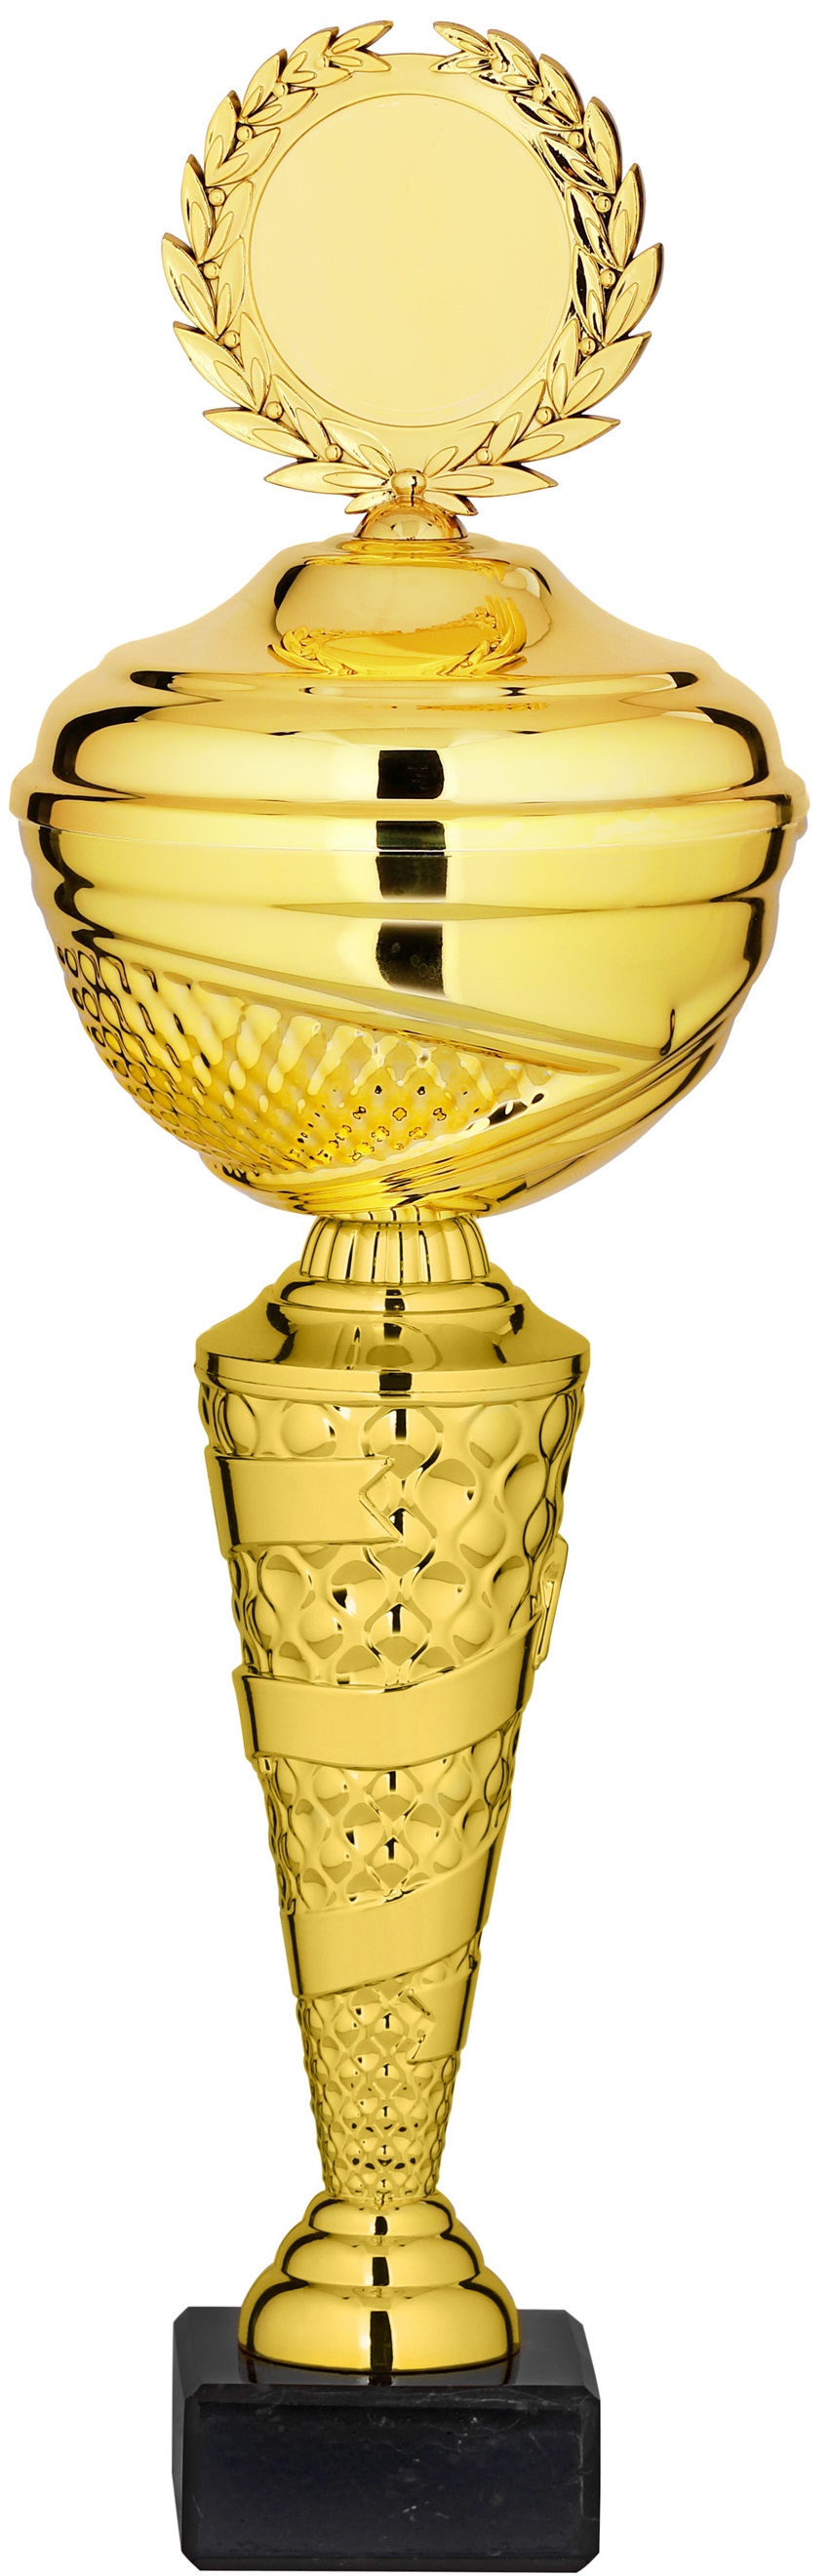 Pokal P600-Gold  inkl. Gravur und Emblem 44,0 cm